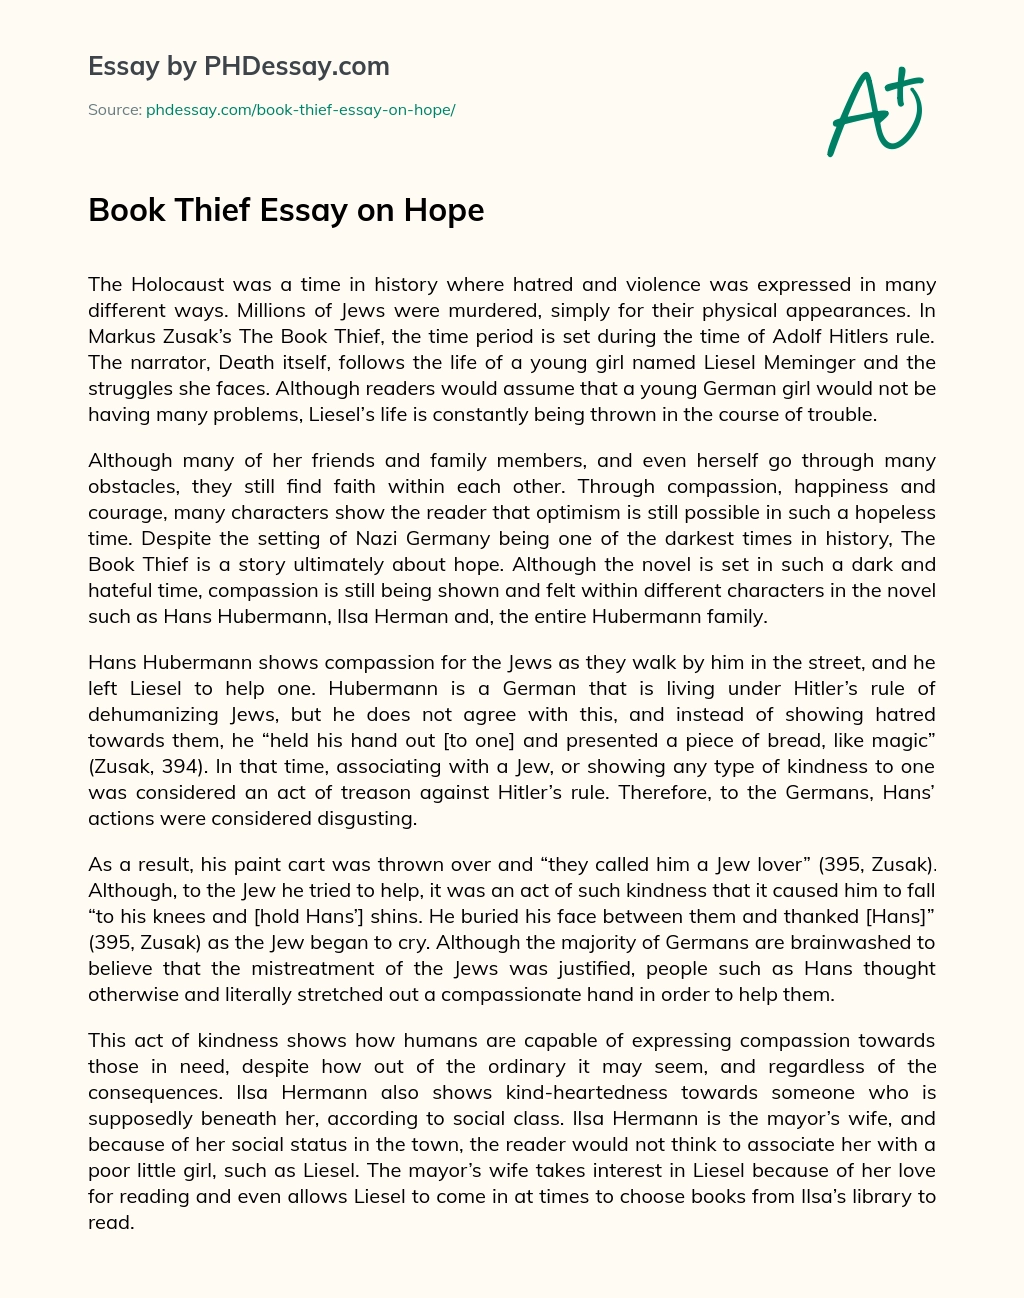 Book Thief Essay on Hope essay